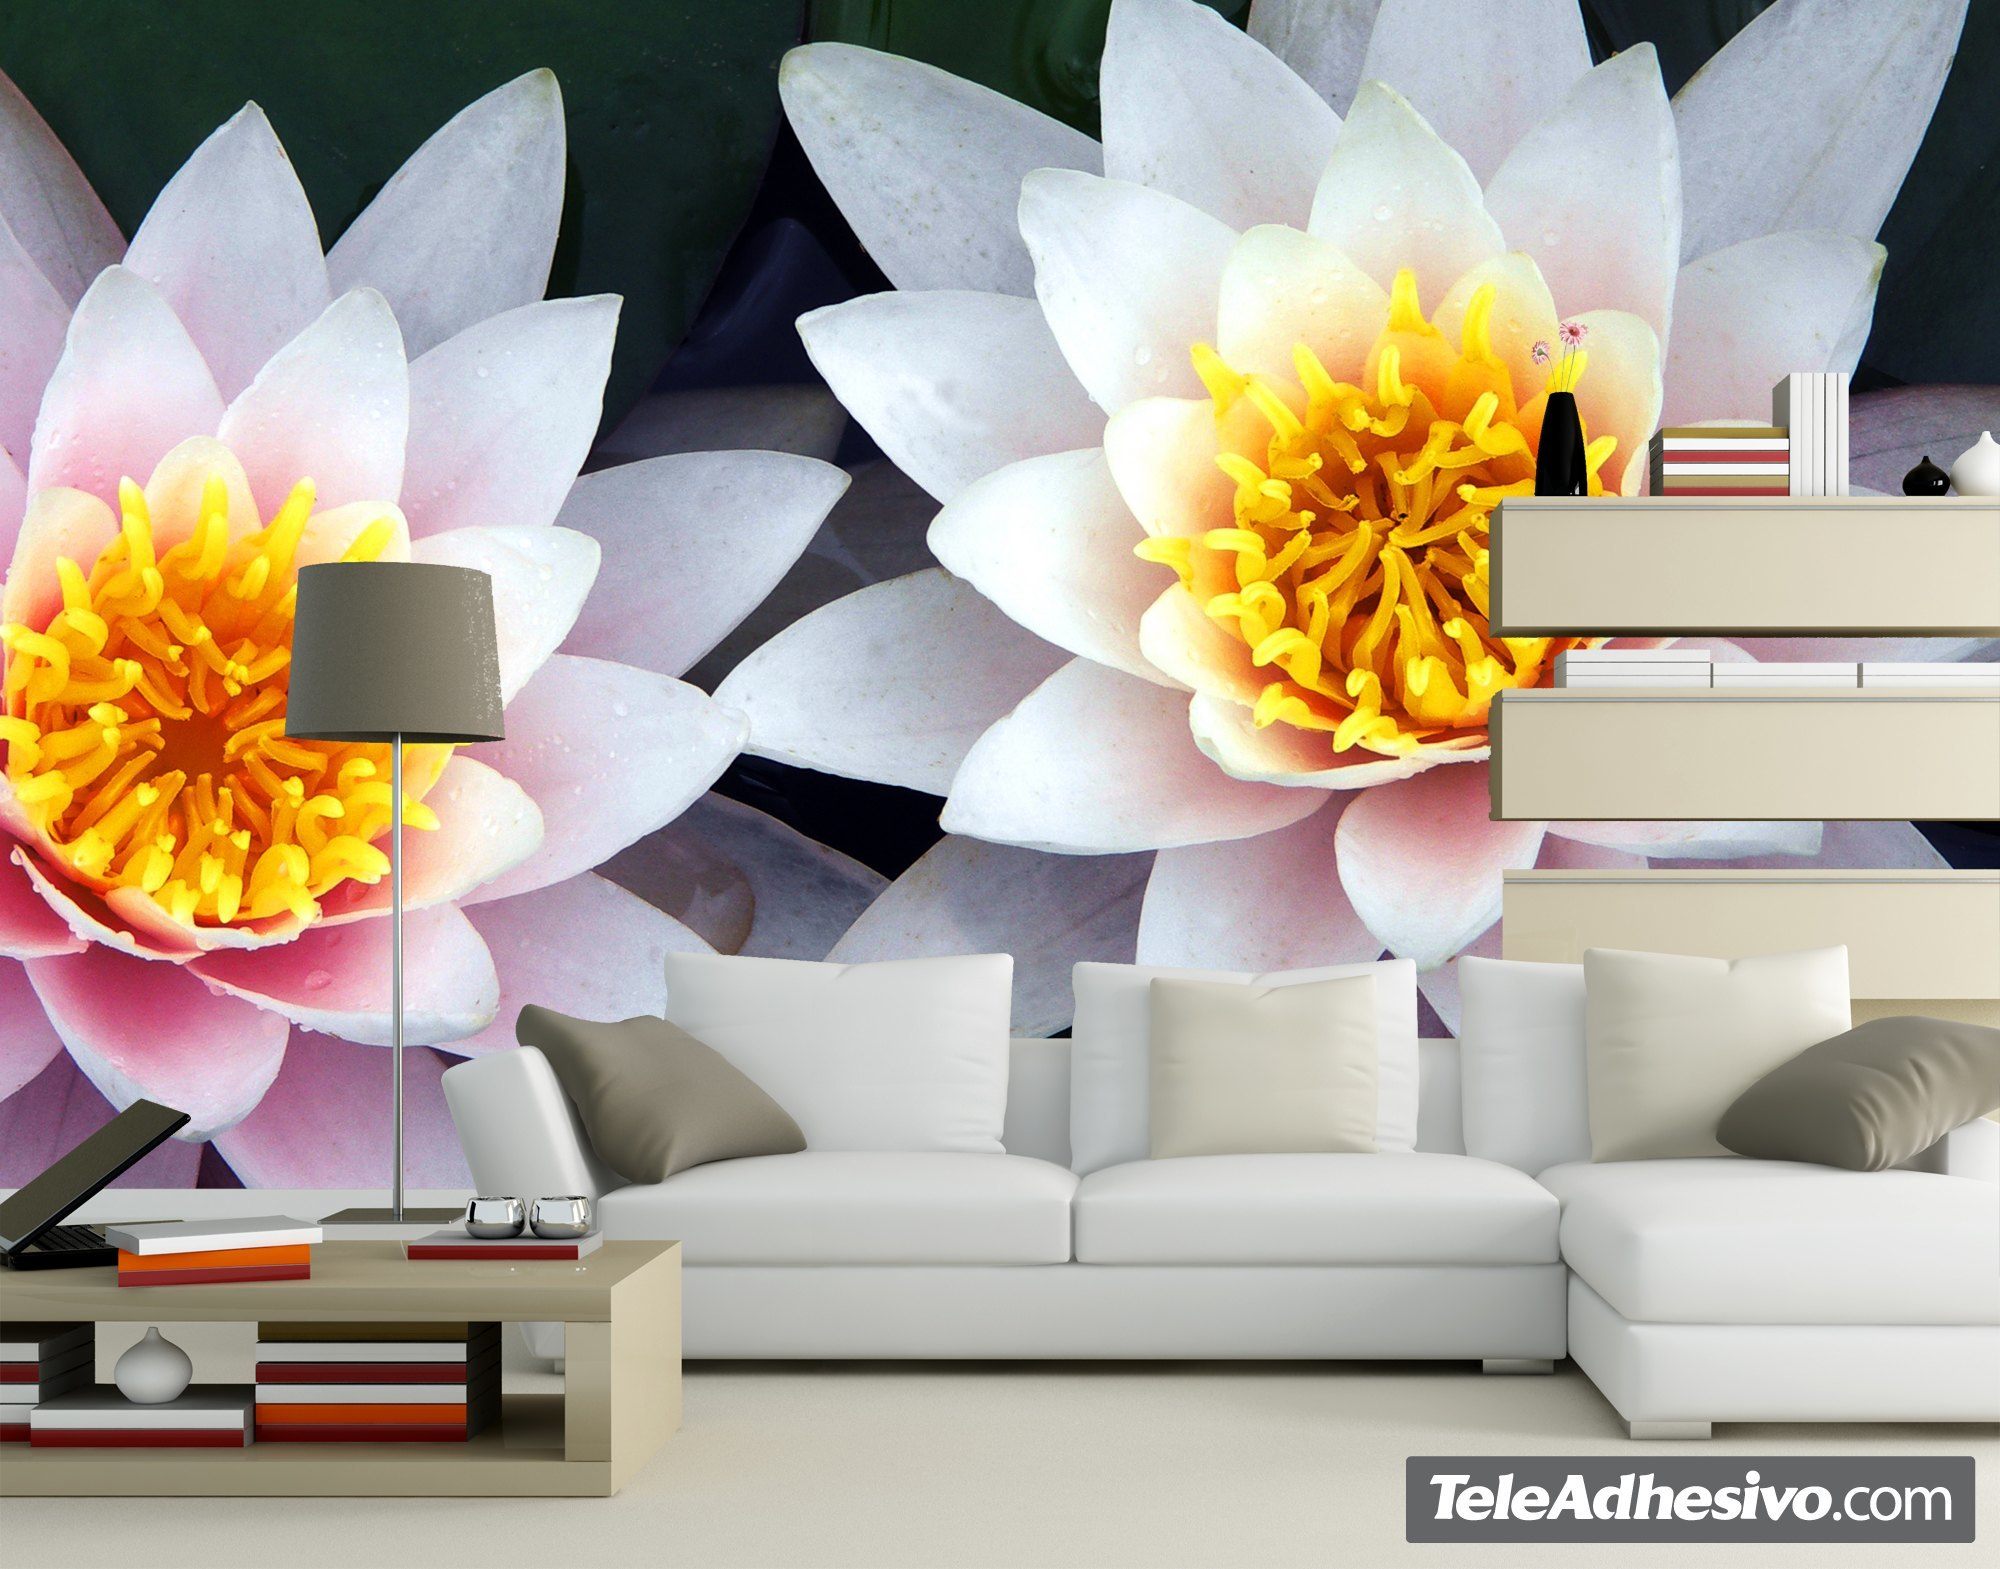 Poster xxl: Fleurs de Lotus